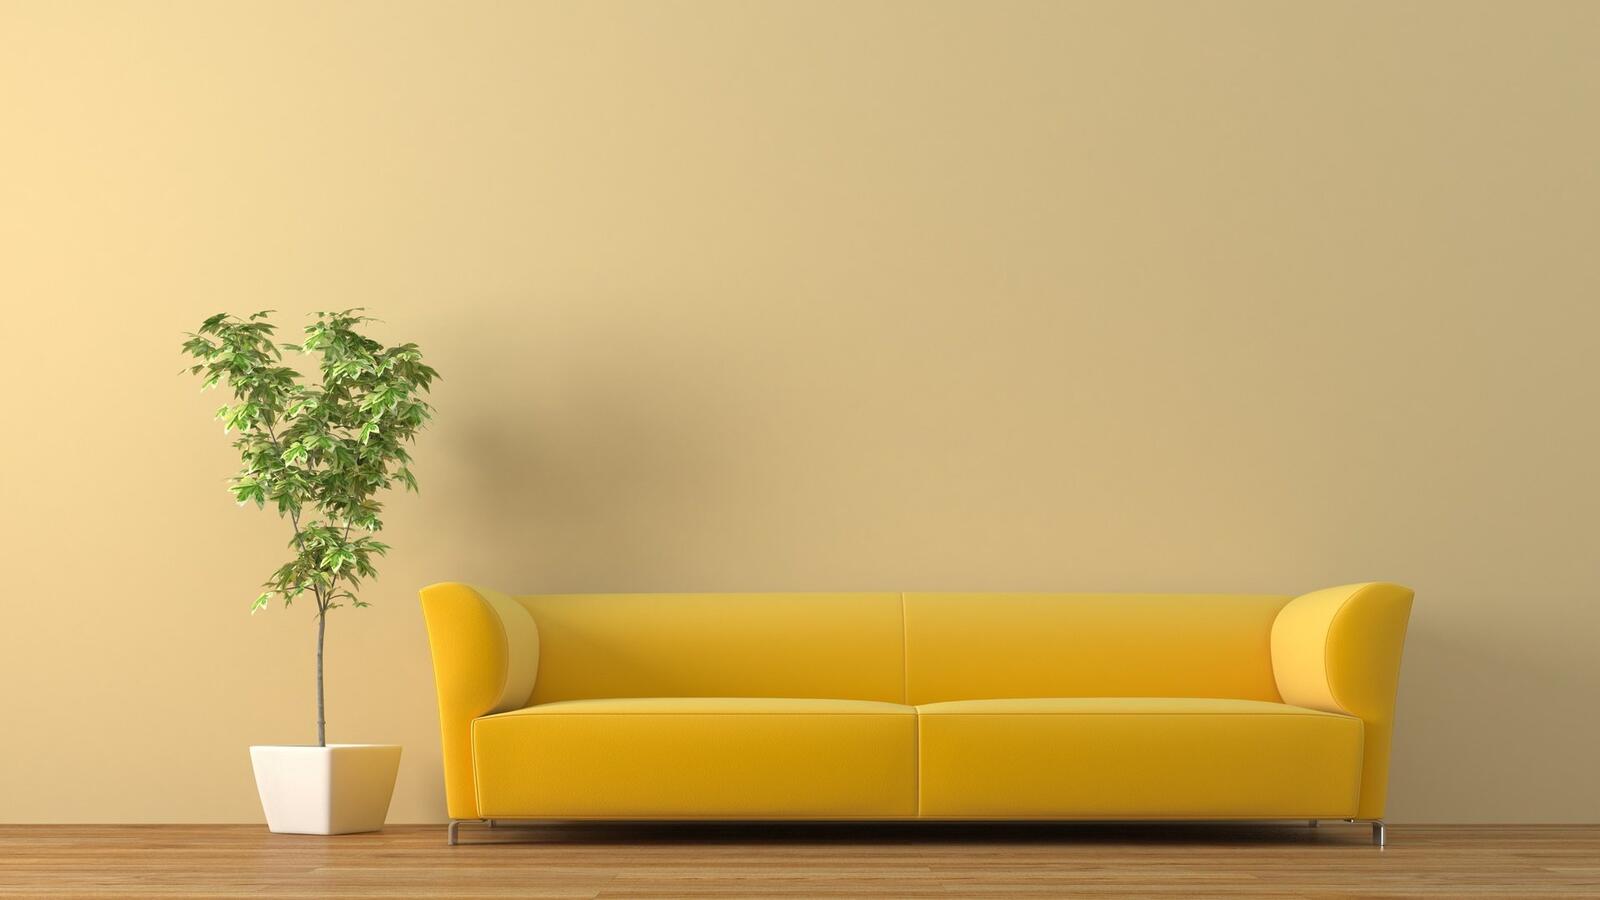 Wallpapers beautiful yellow sofa design home on the desktop